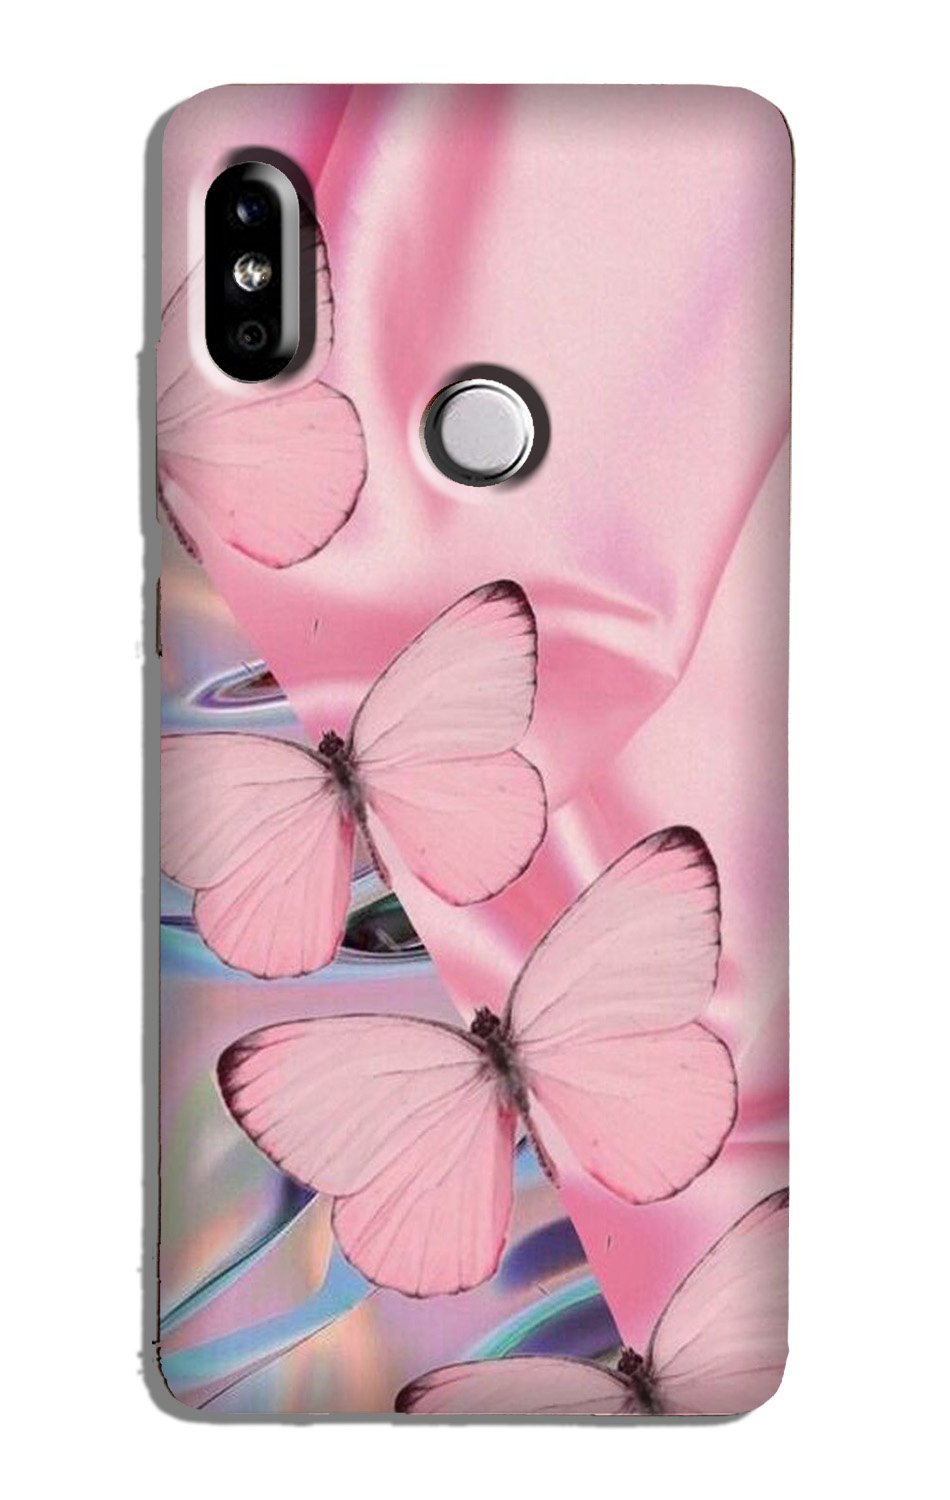 Butterflies Case for Redmi Note 5 Pro